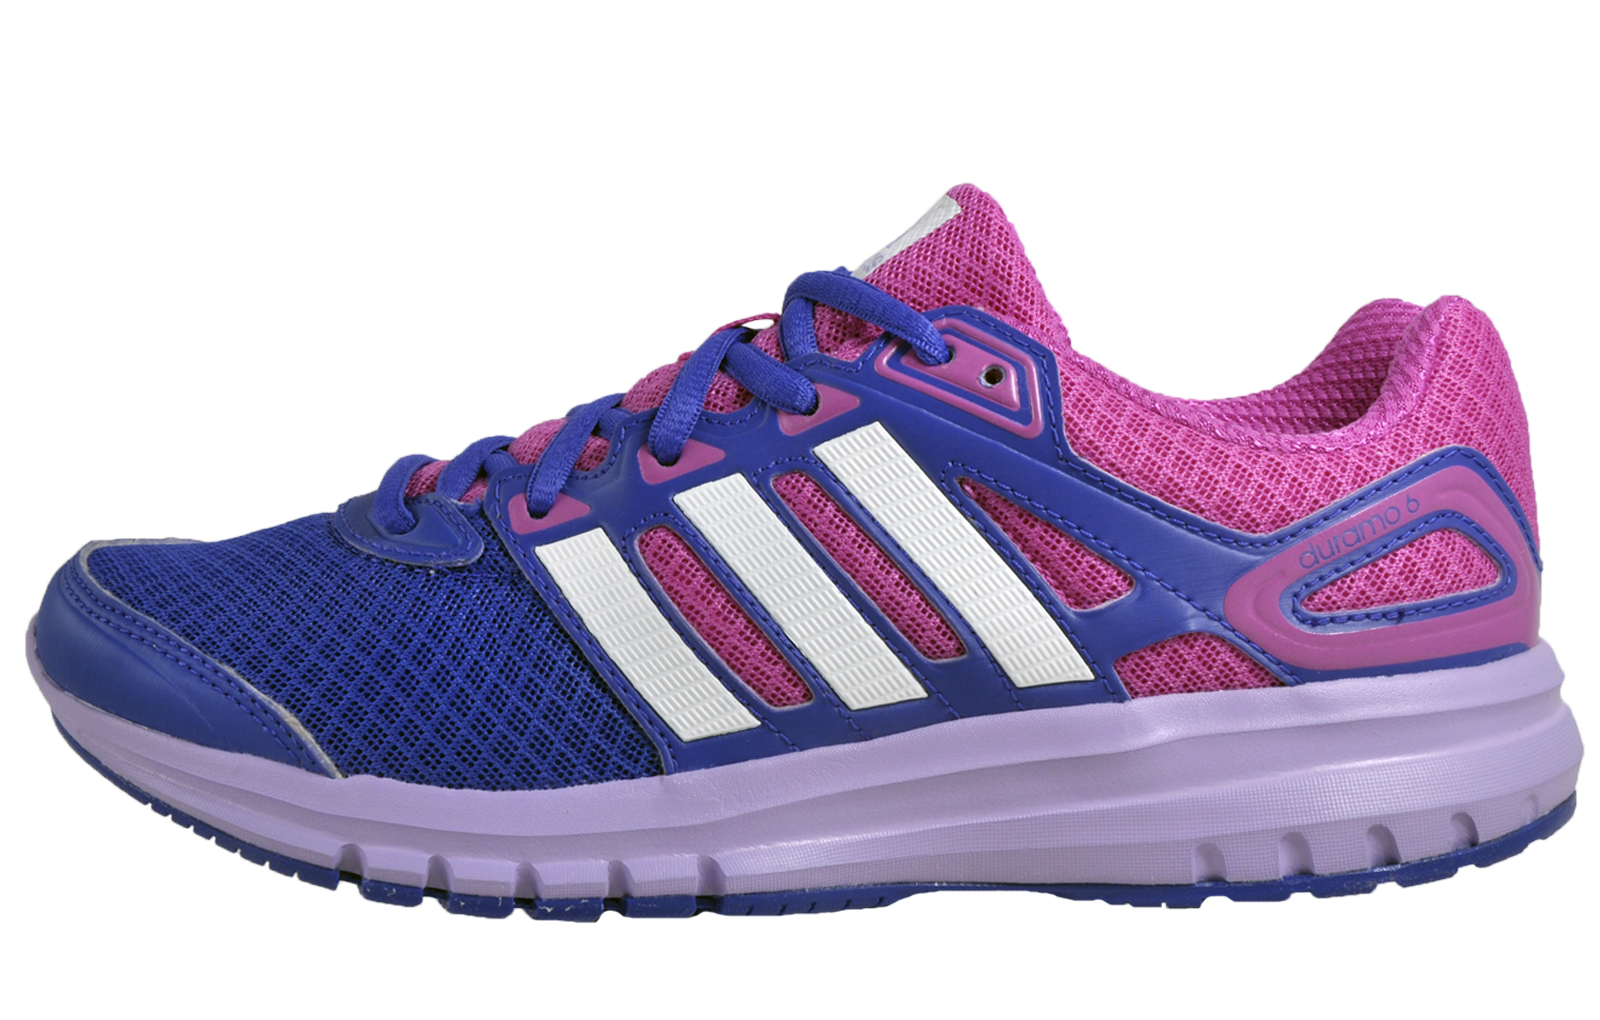 Adidas Duramo 6 Womens Running Shoes Fitness Gym Trainers Purple